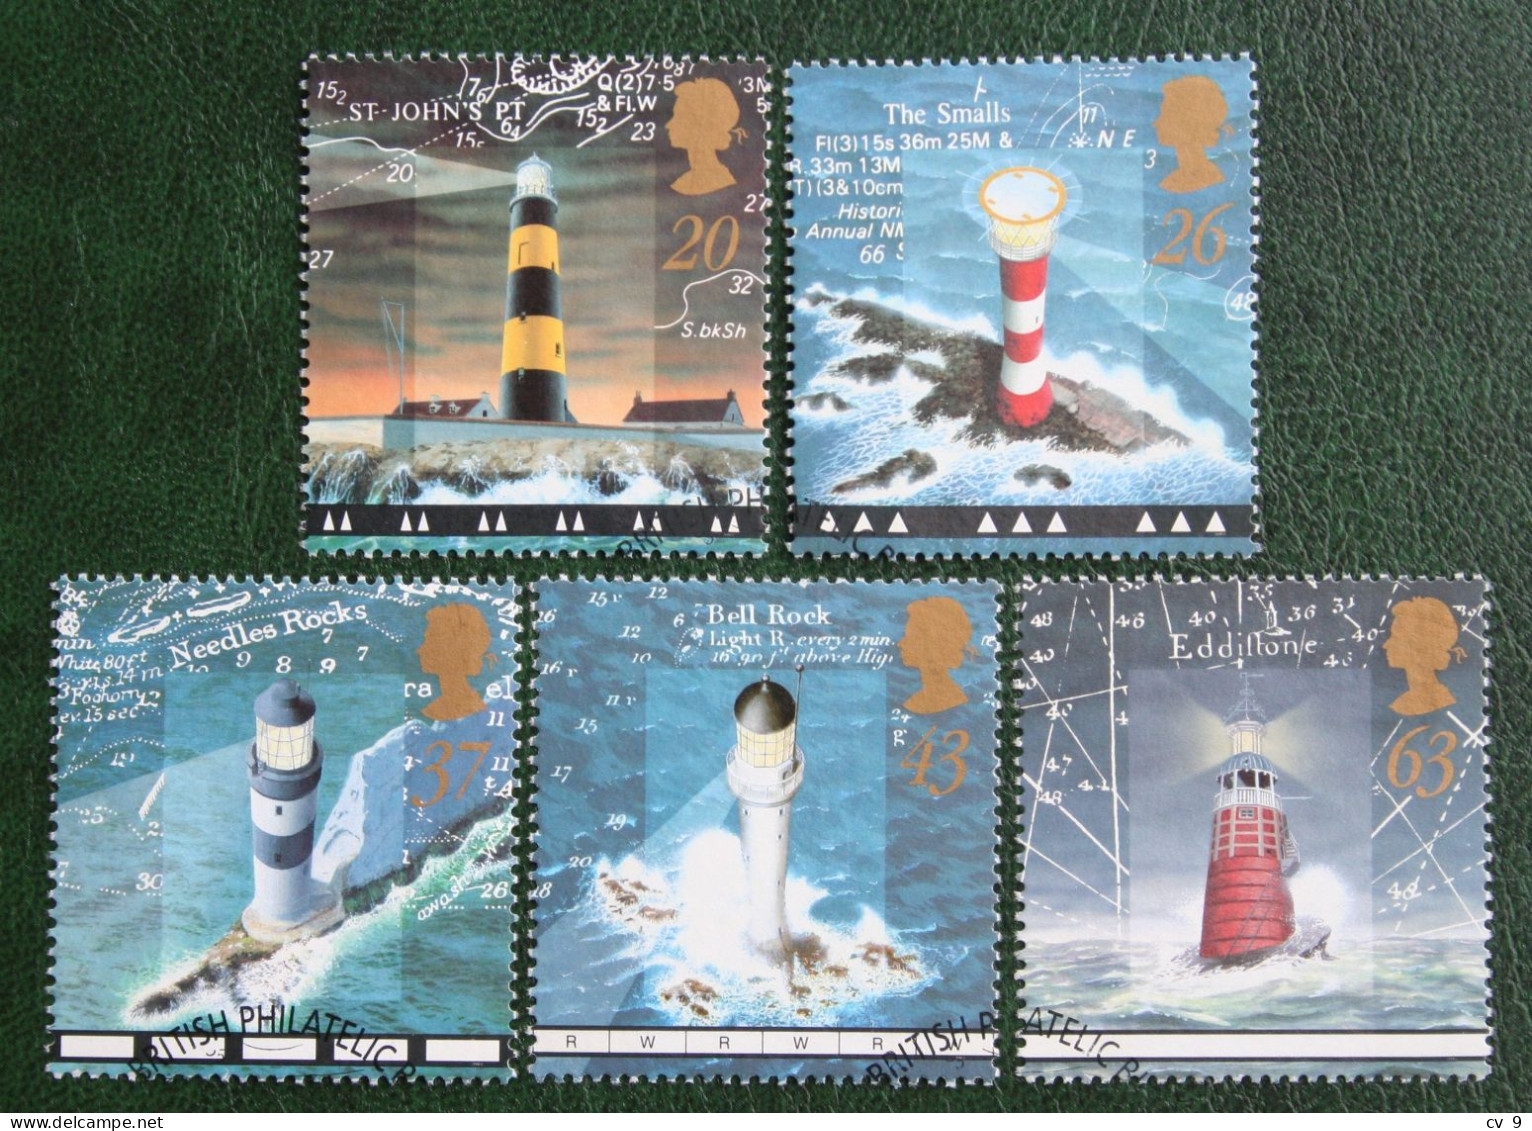 Lighthouse Vuurtoren Leuchtturm Phare (Mi 1742-1746 1998 Used Gebruikt Oblitere ENGLAND GRANDE-BRETAGNE GB GREAT BRITAIN - Used Stamps